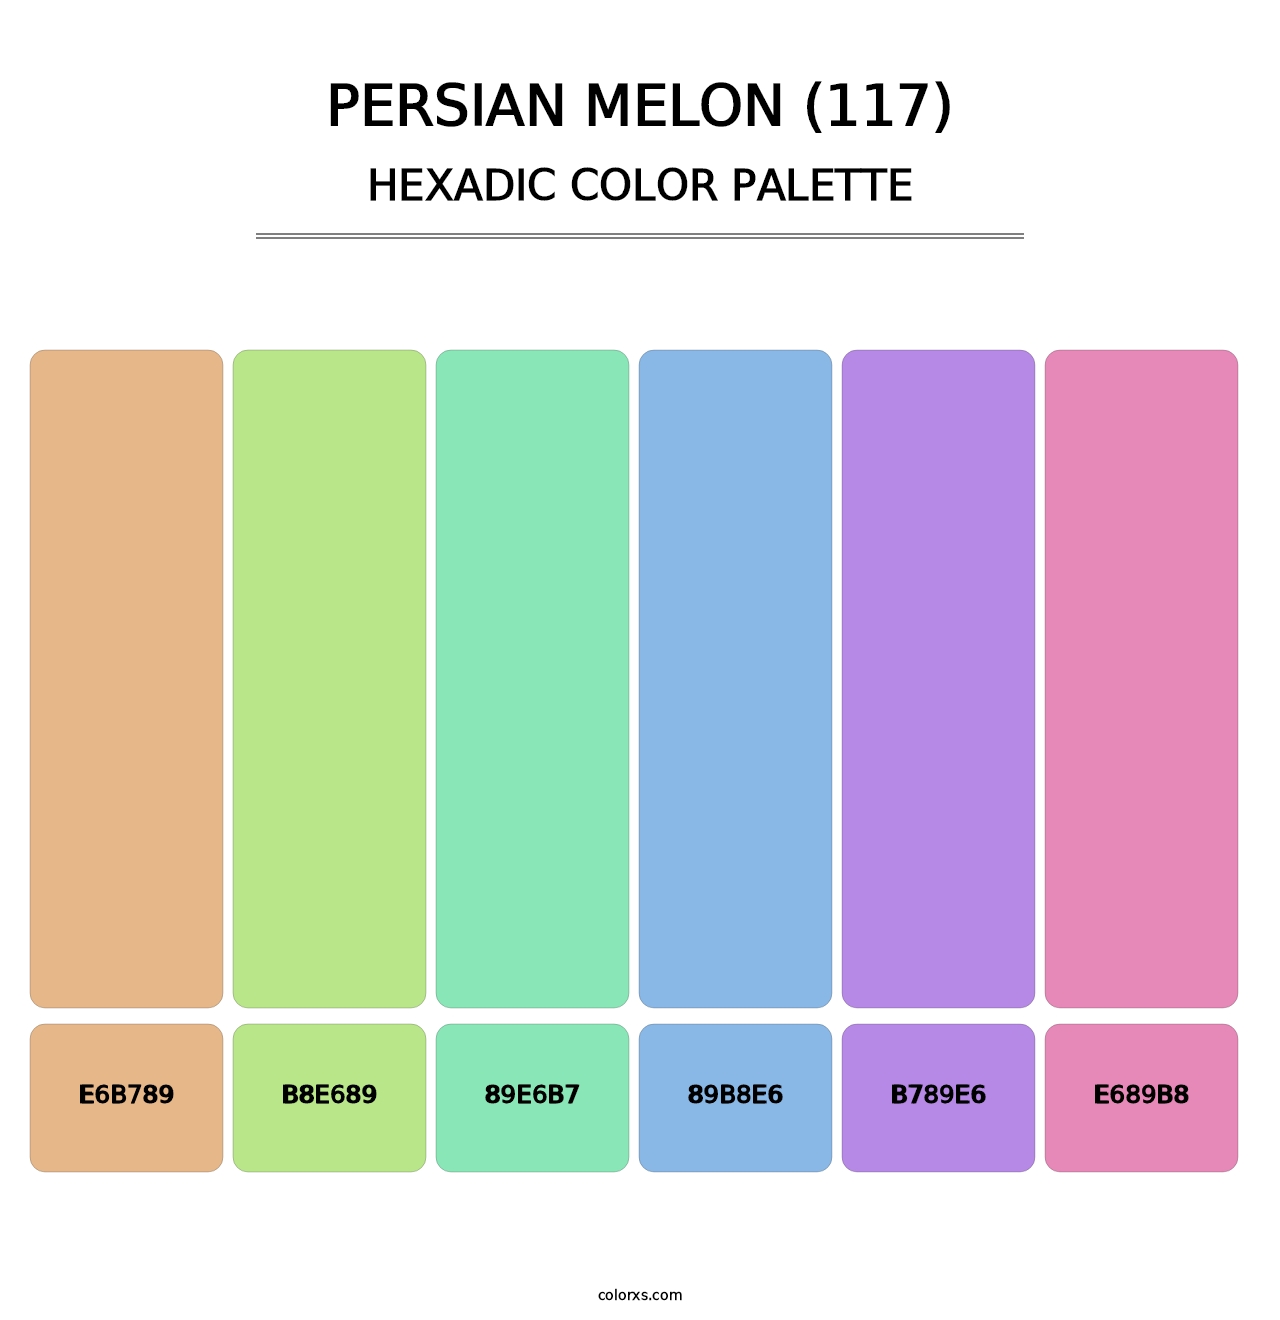 Persian Melon (117) - Hexadic Color Palette